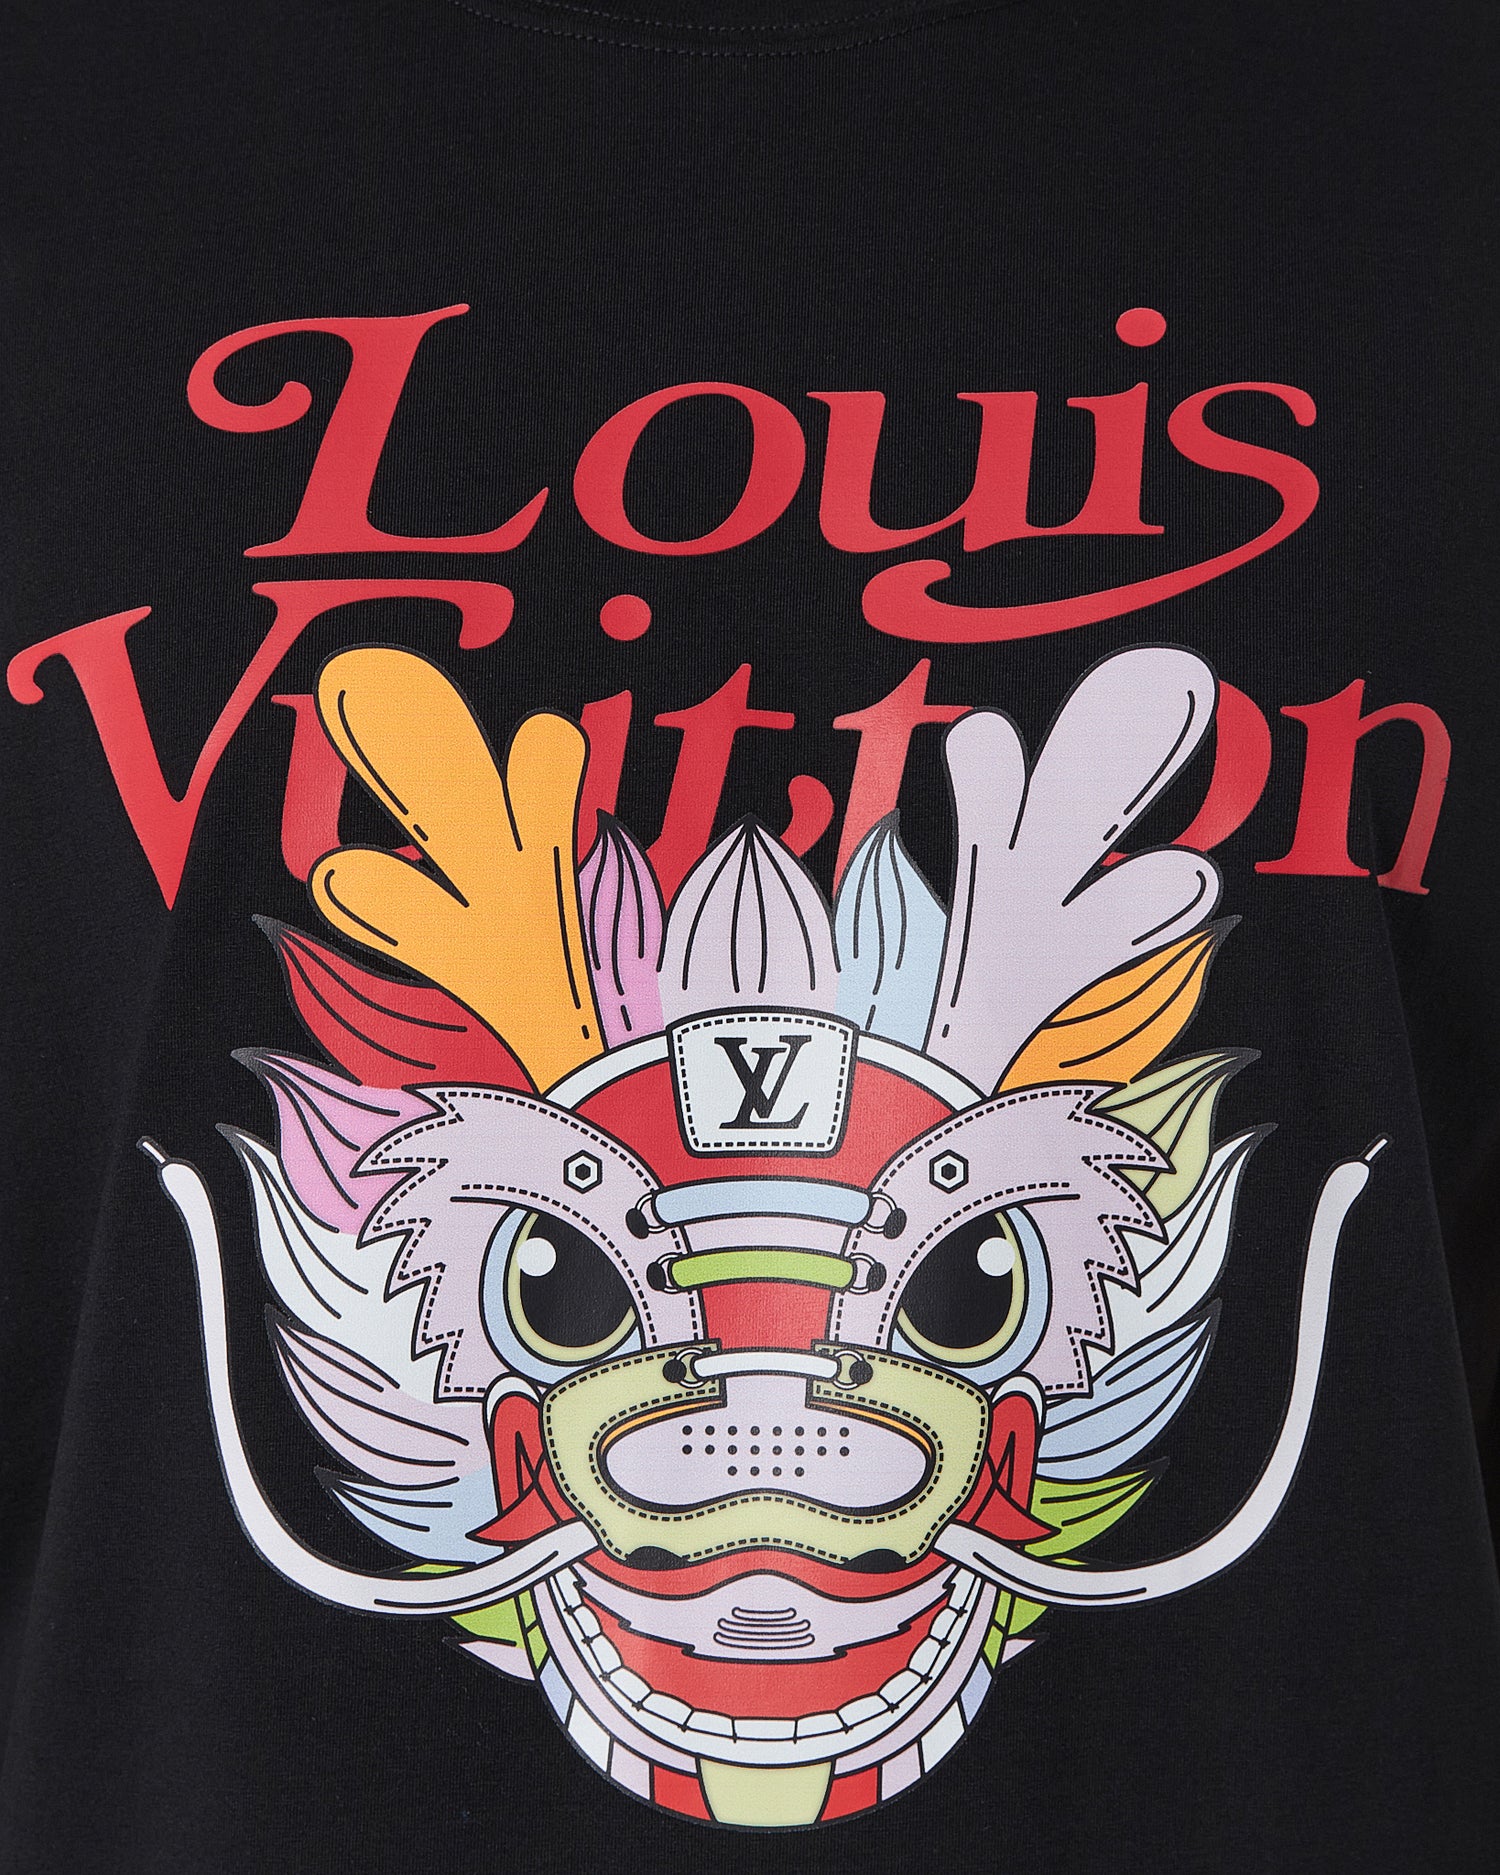 LV Dragon Printed Men Black T-Shirt 17.90